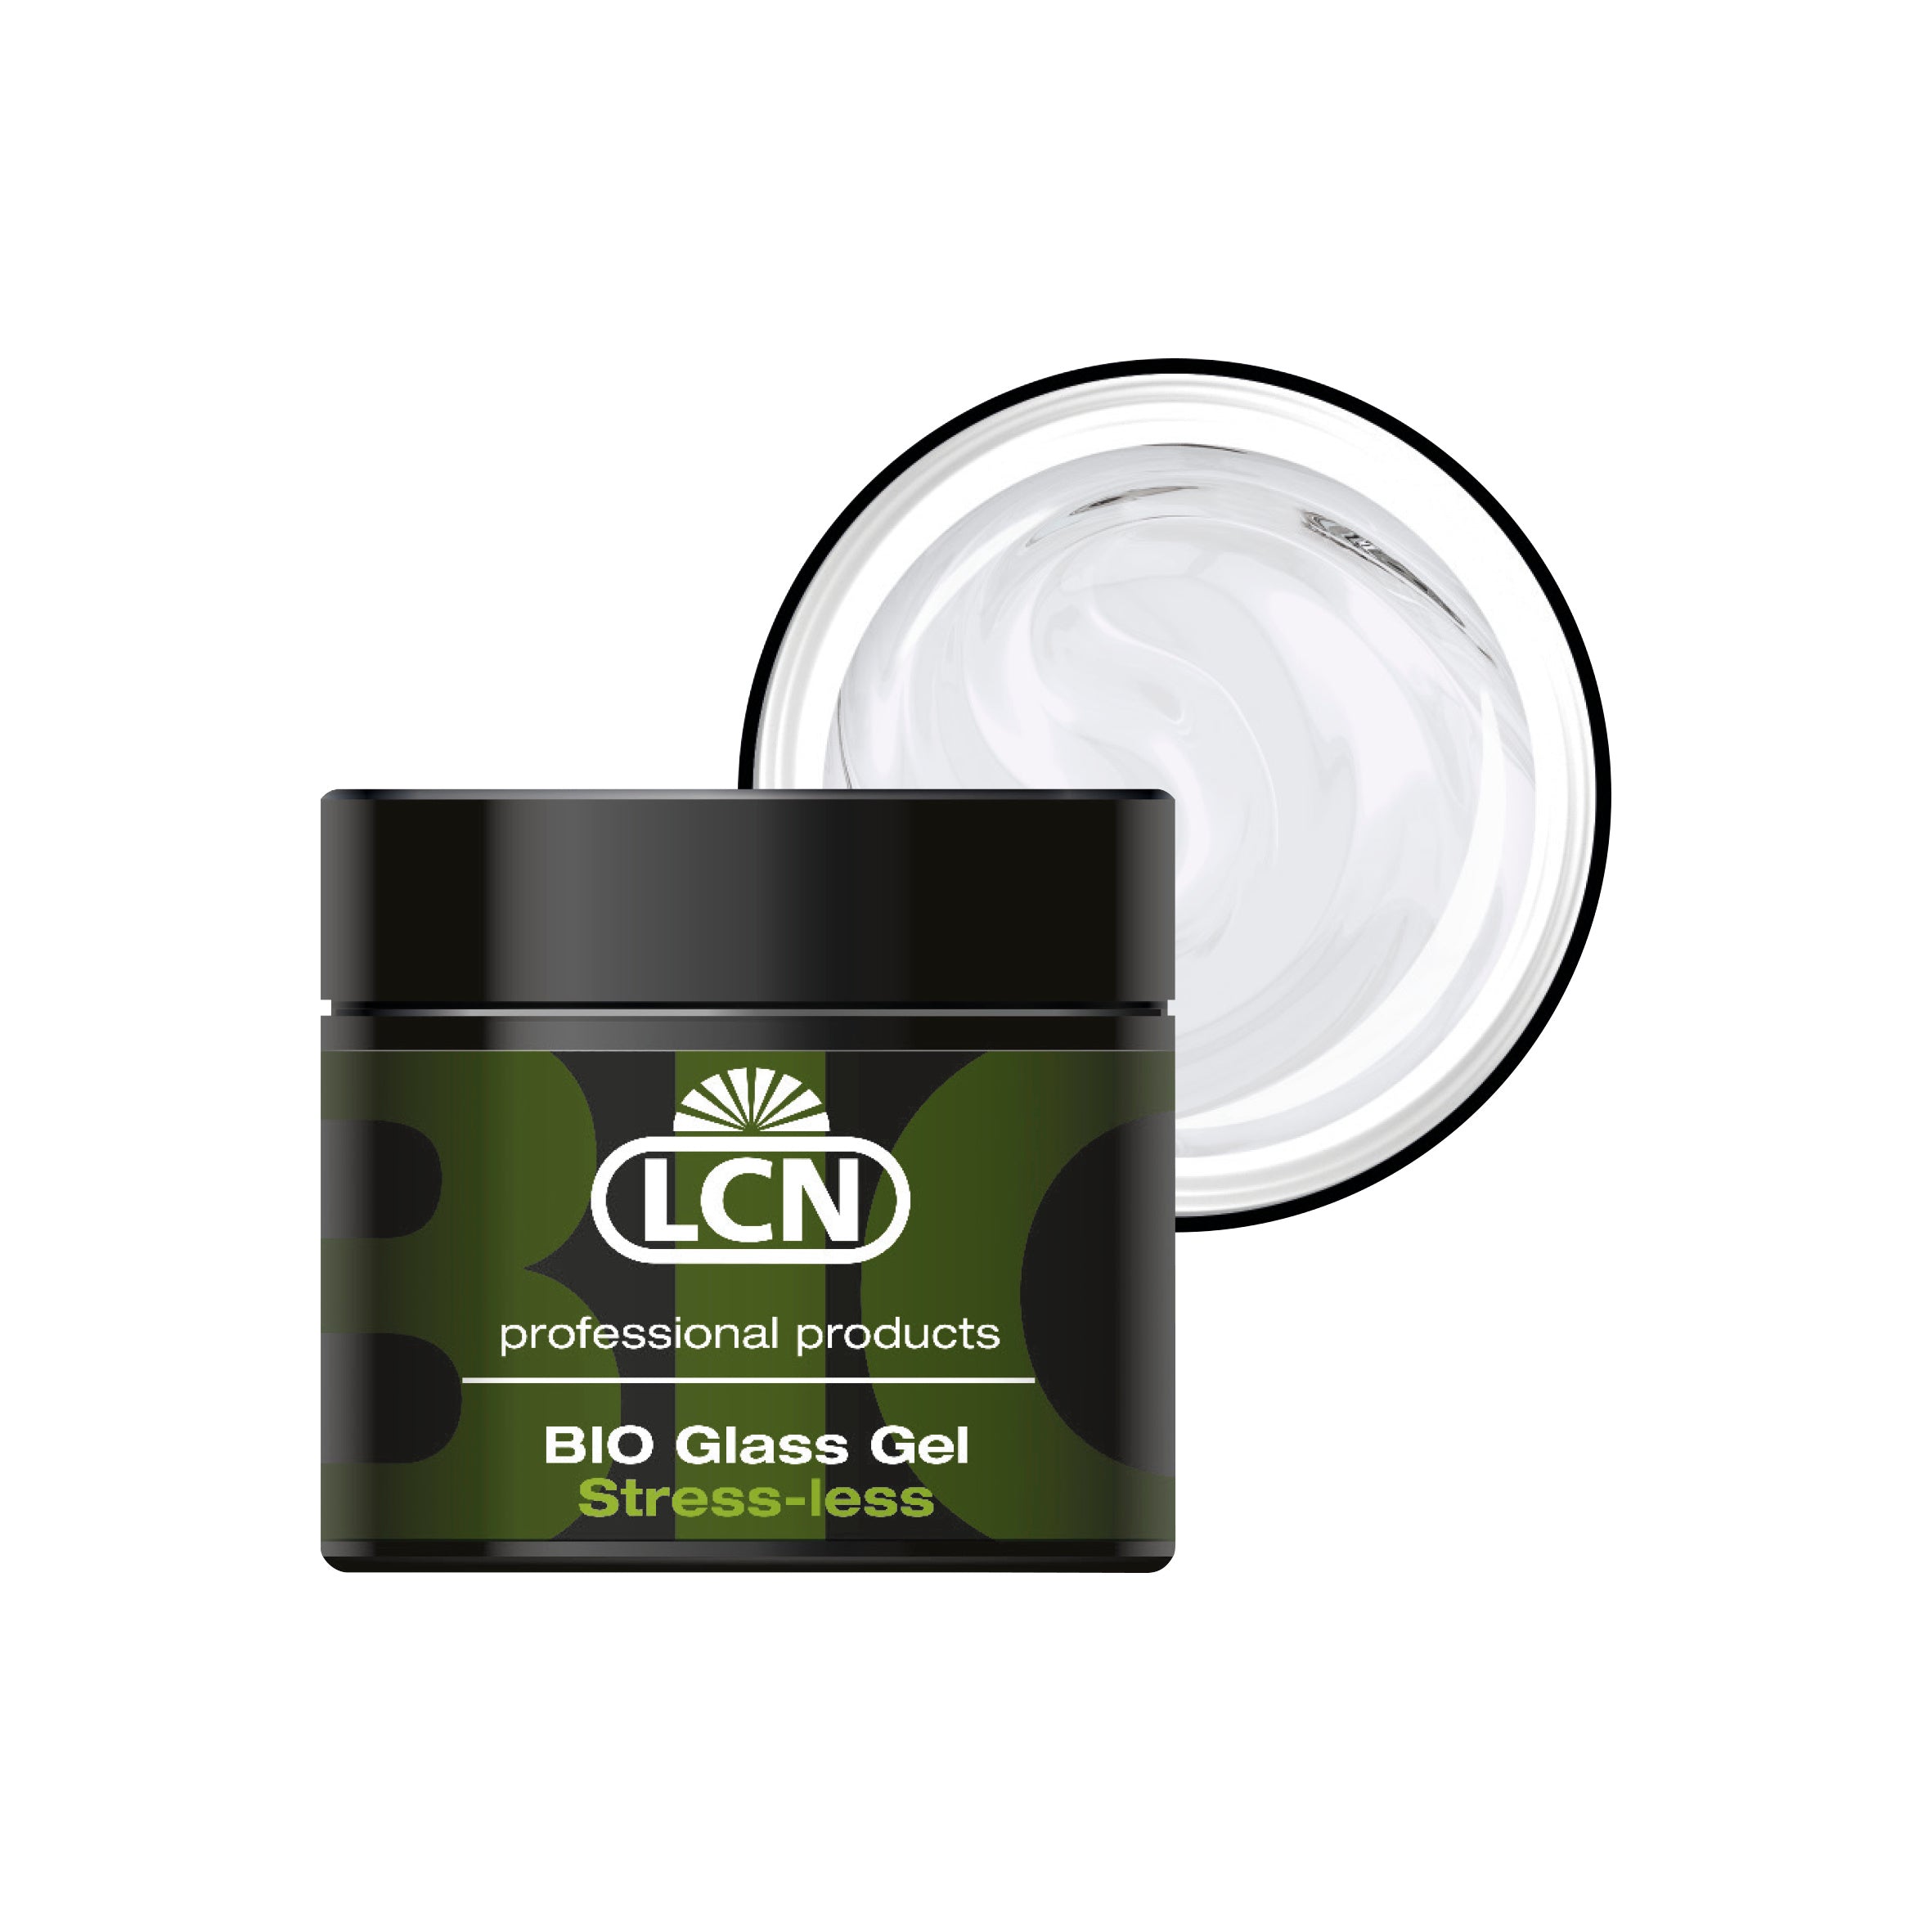 Bio Glass GEL "Stress-less" 25ml Clear